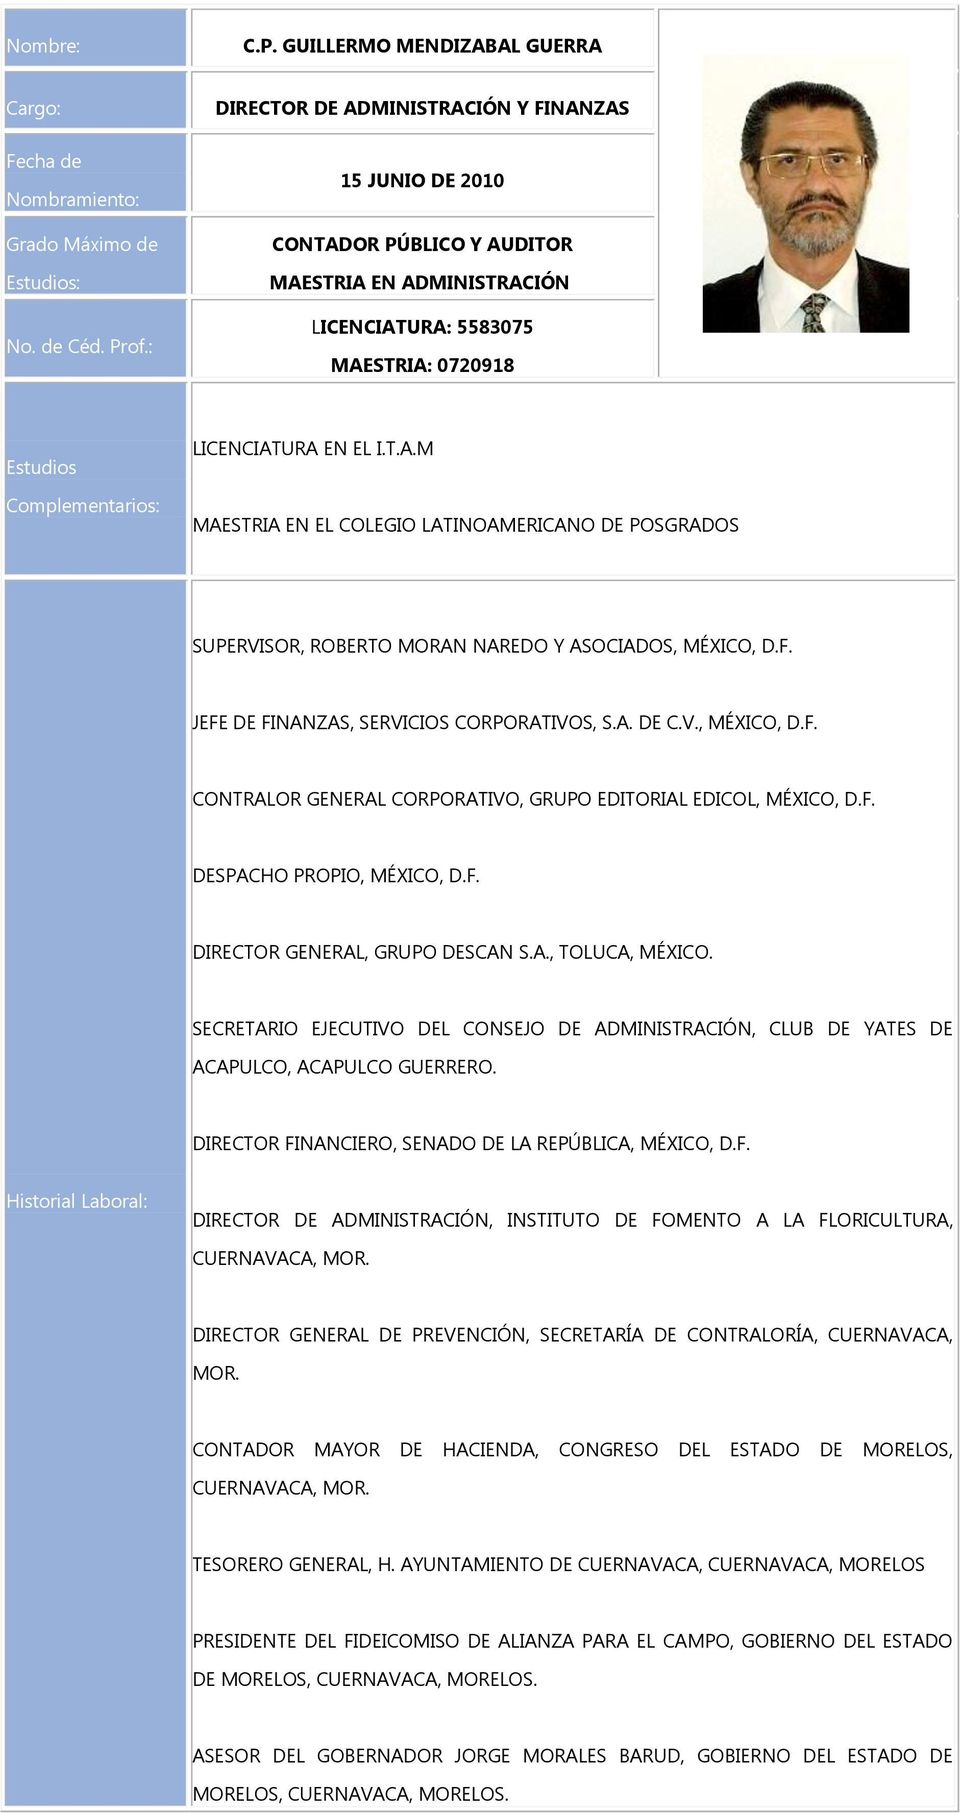 F. JEFE DE FINANZAS, SERVICIOS CORPORATIVOS, S.A. DE C.V., MÉXICO, D.F. CONTRALOR GENERAL CORPORATIVO, GRUPO EDITORIAL EDICOL, MÉXICO, D.F. DESPACHO PROPIO, MÉXICO, D.F. DIRECTOR GENERAL, GRUPO DESCAN S.